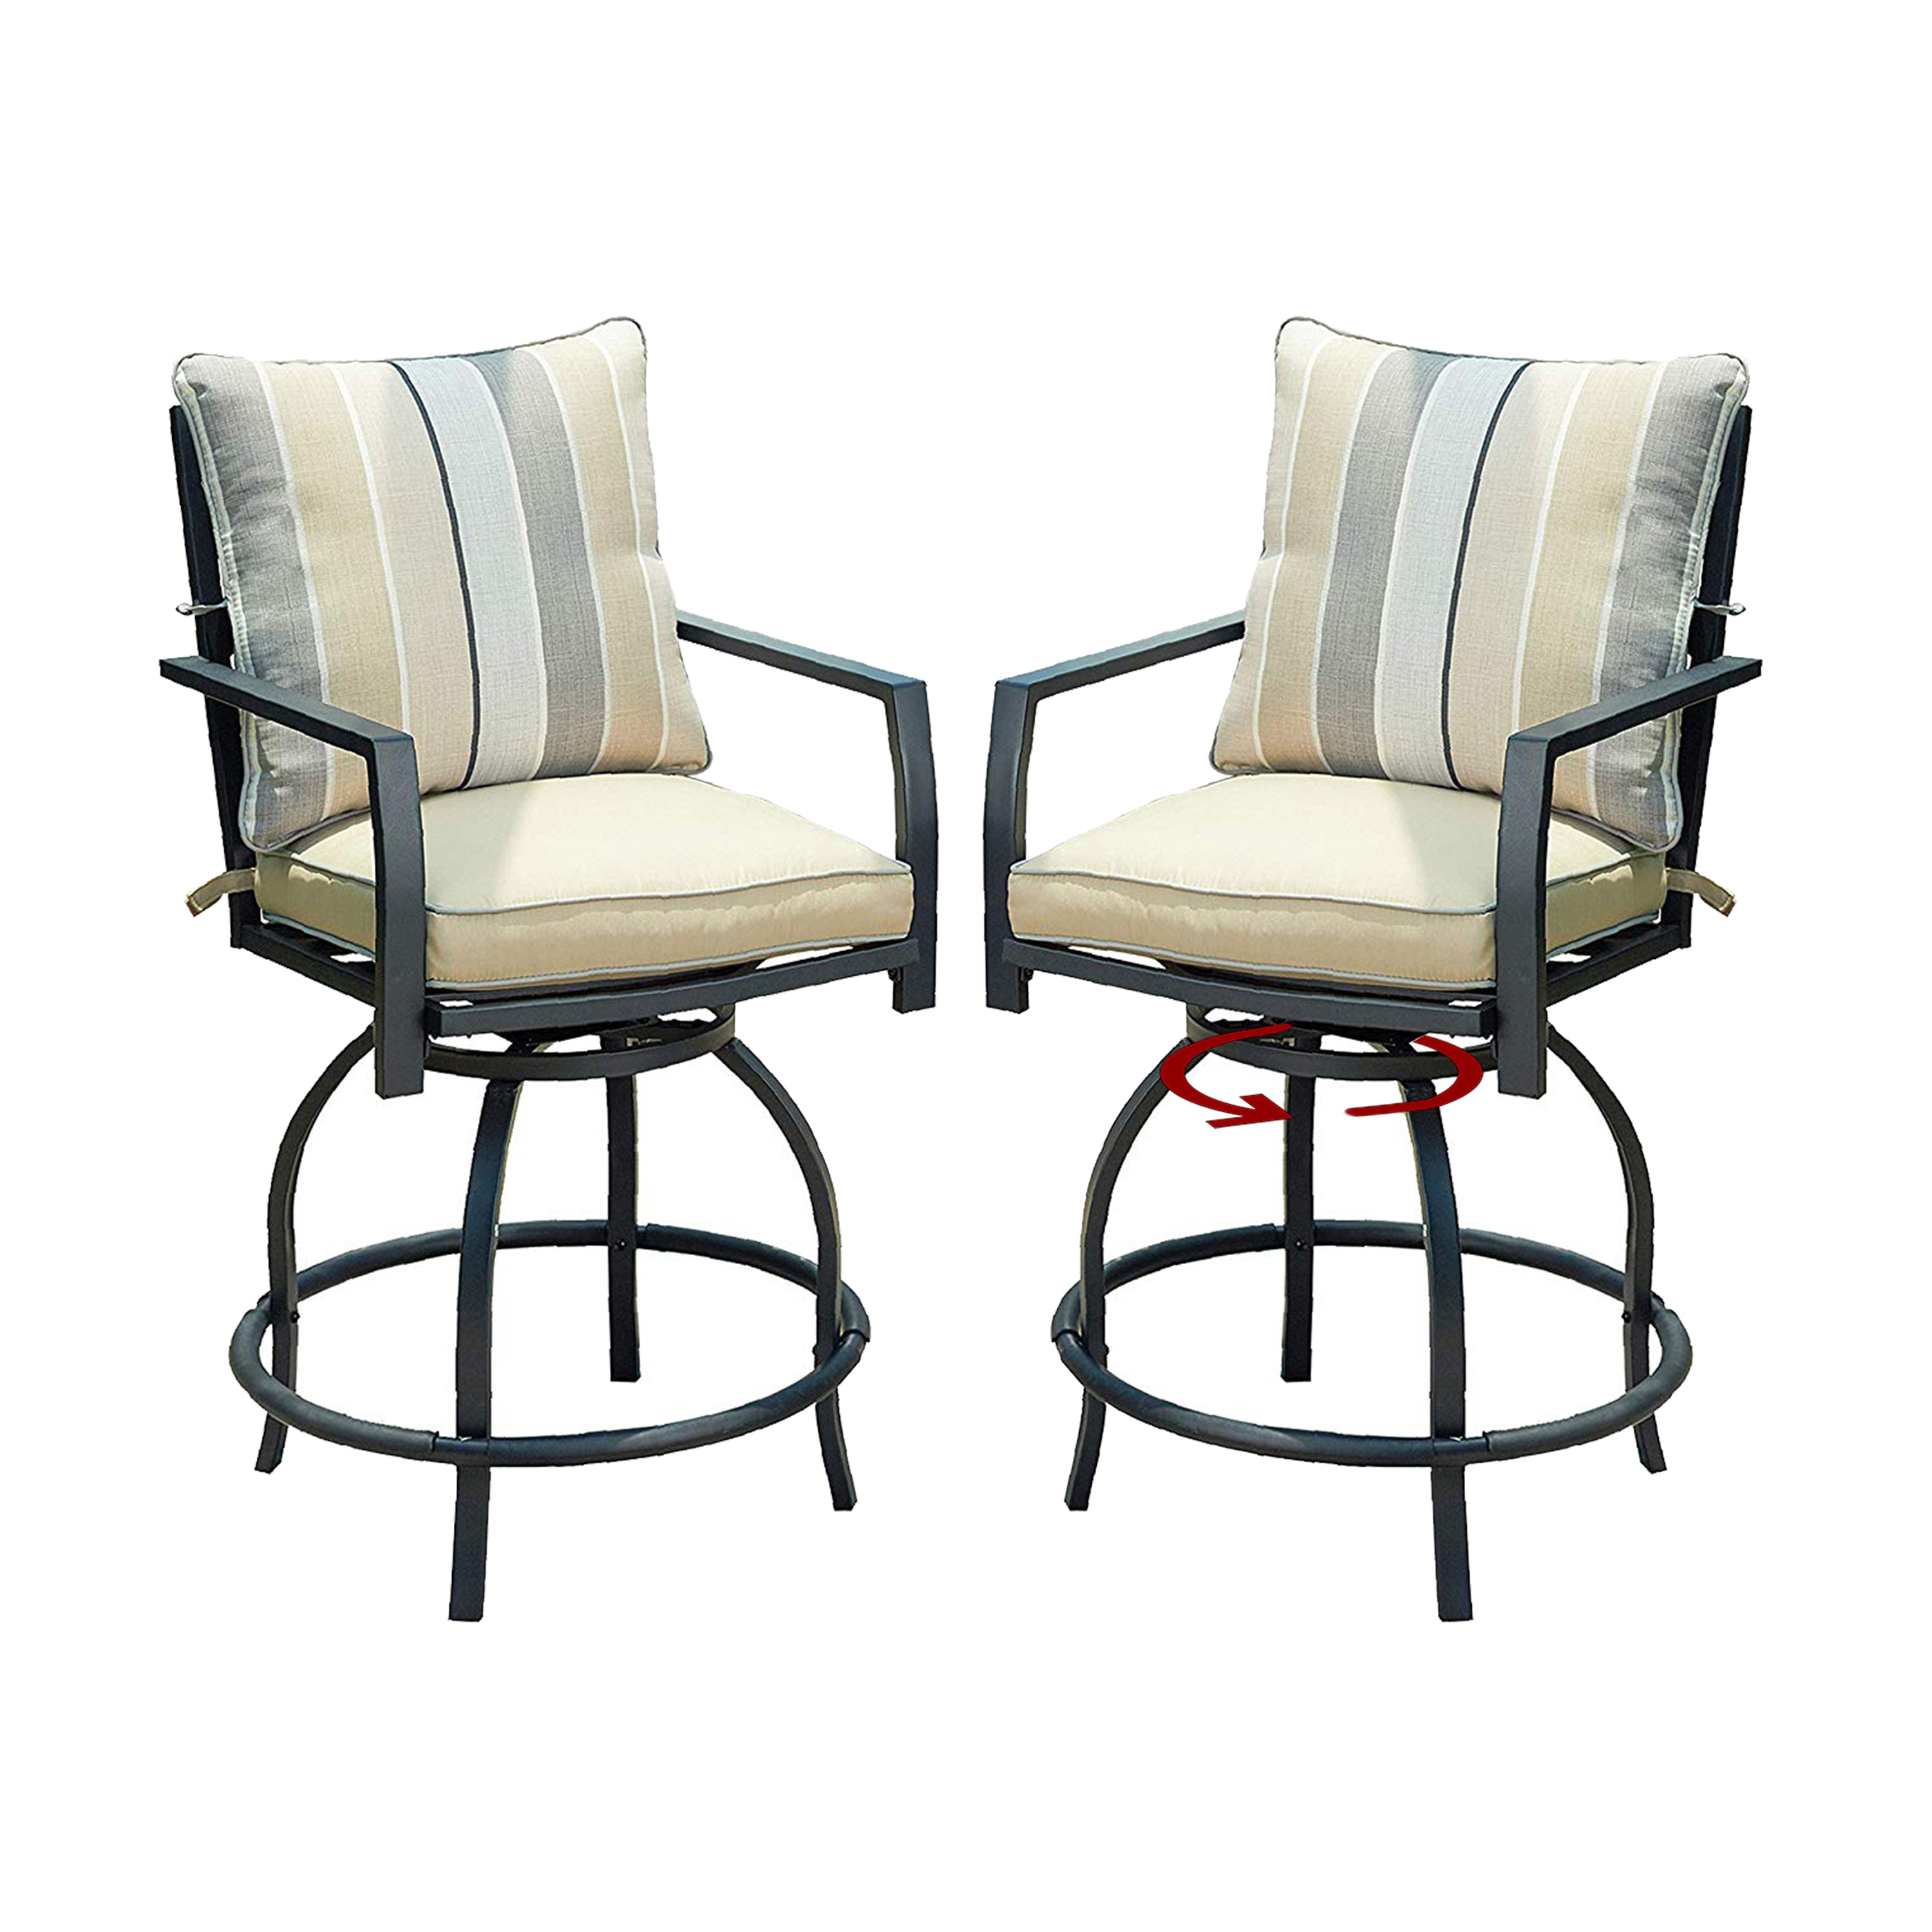 Metal Frame Swivel Bar Stool Chair, Outdoor Bar Height Swivel Stools With Backs